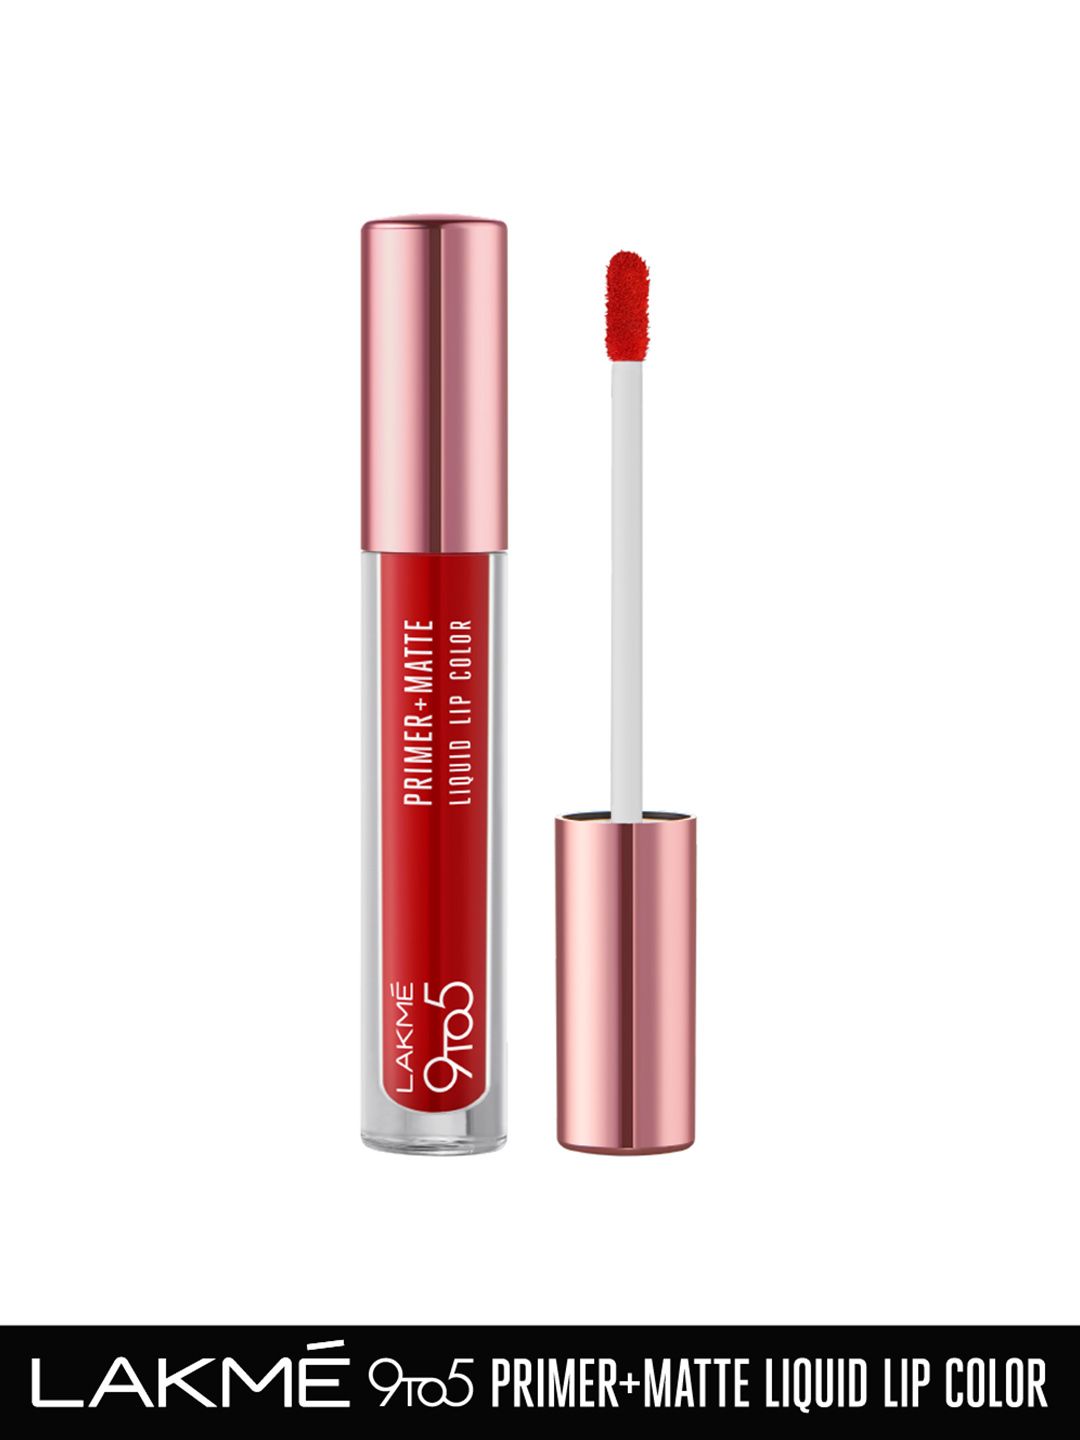 Lakme 9 to 5 Primer+Matte Liquid Lip Color with Vit-E and Argan Oil 4.2ml - Driven Red MR2 Price in India